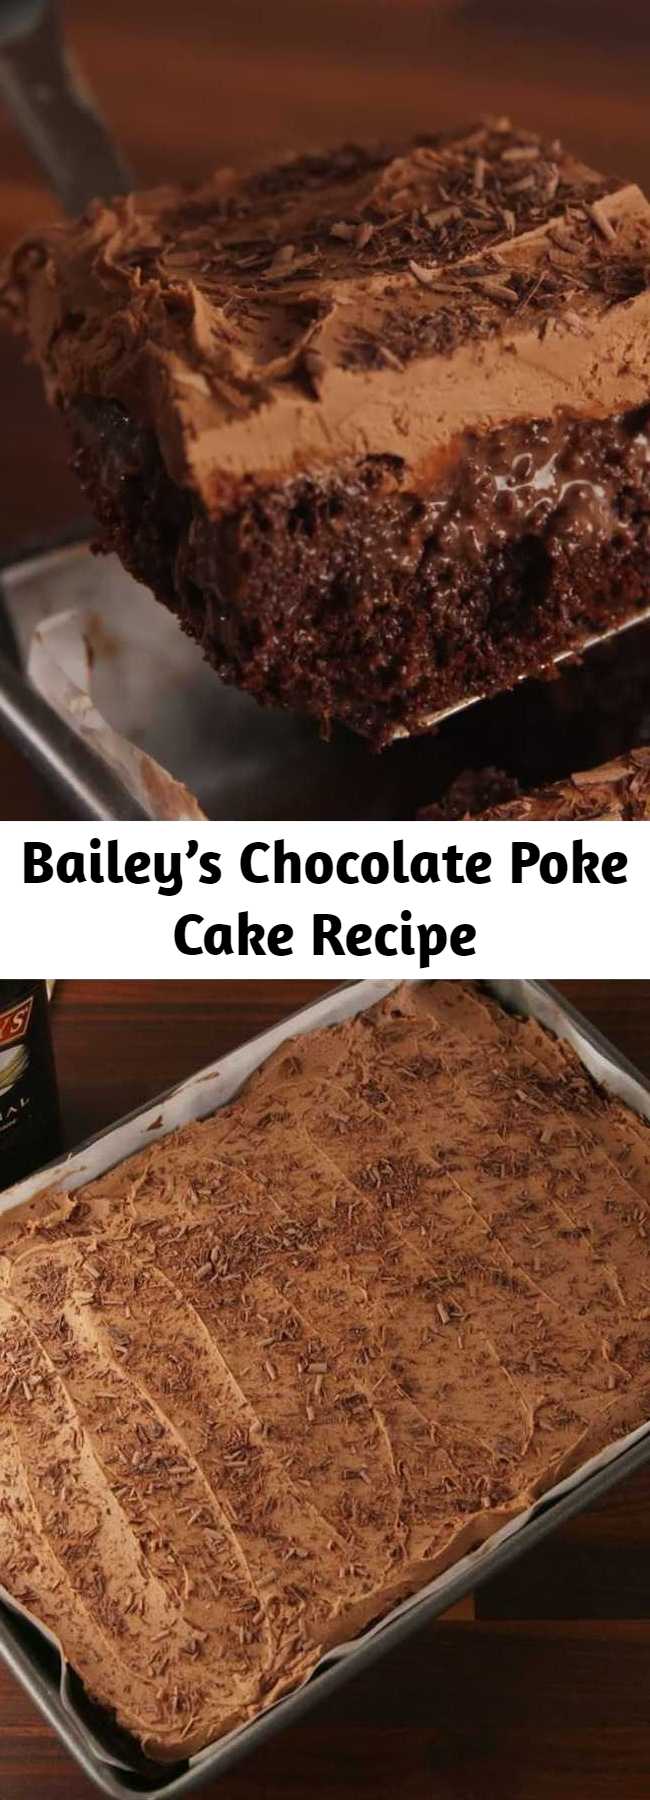 Bailey’s Chocolate Poke Cake Recipe - Chocolate on chocolate. #food #easyrecipe #recipe #pastryporn #inspiration #ideas #diy #home #forkyeah #instagood